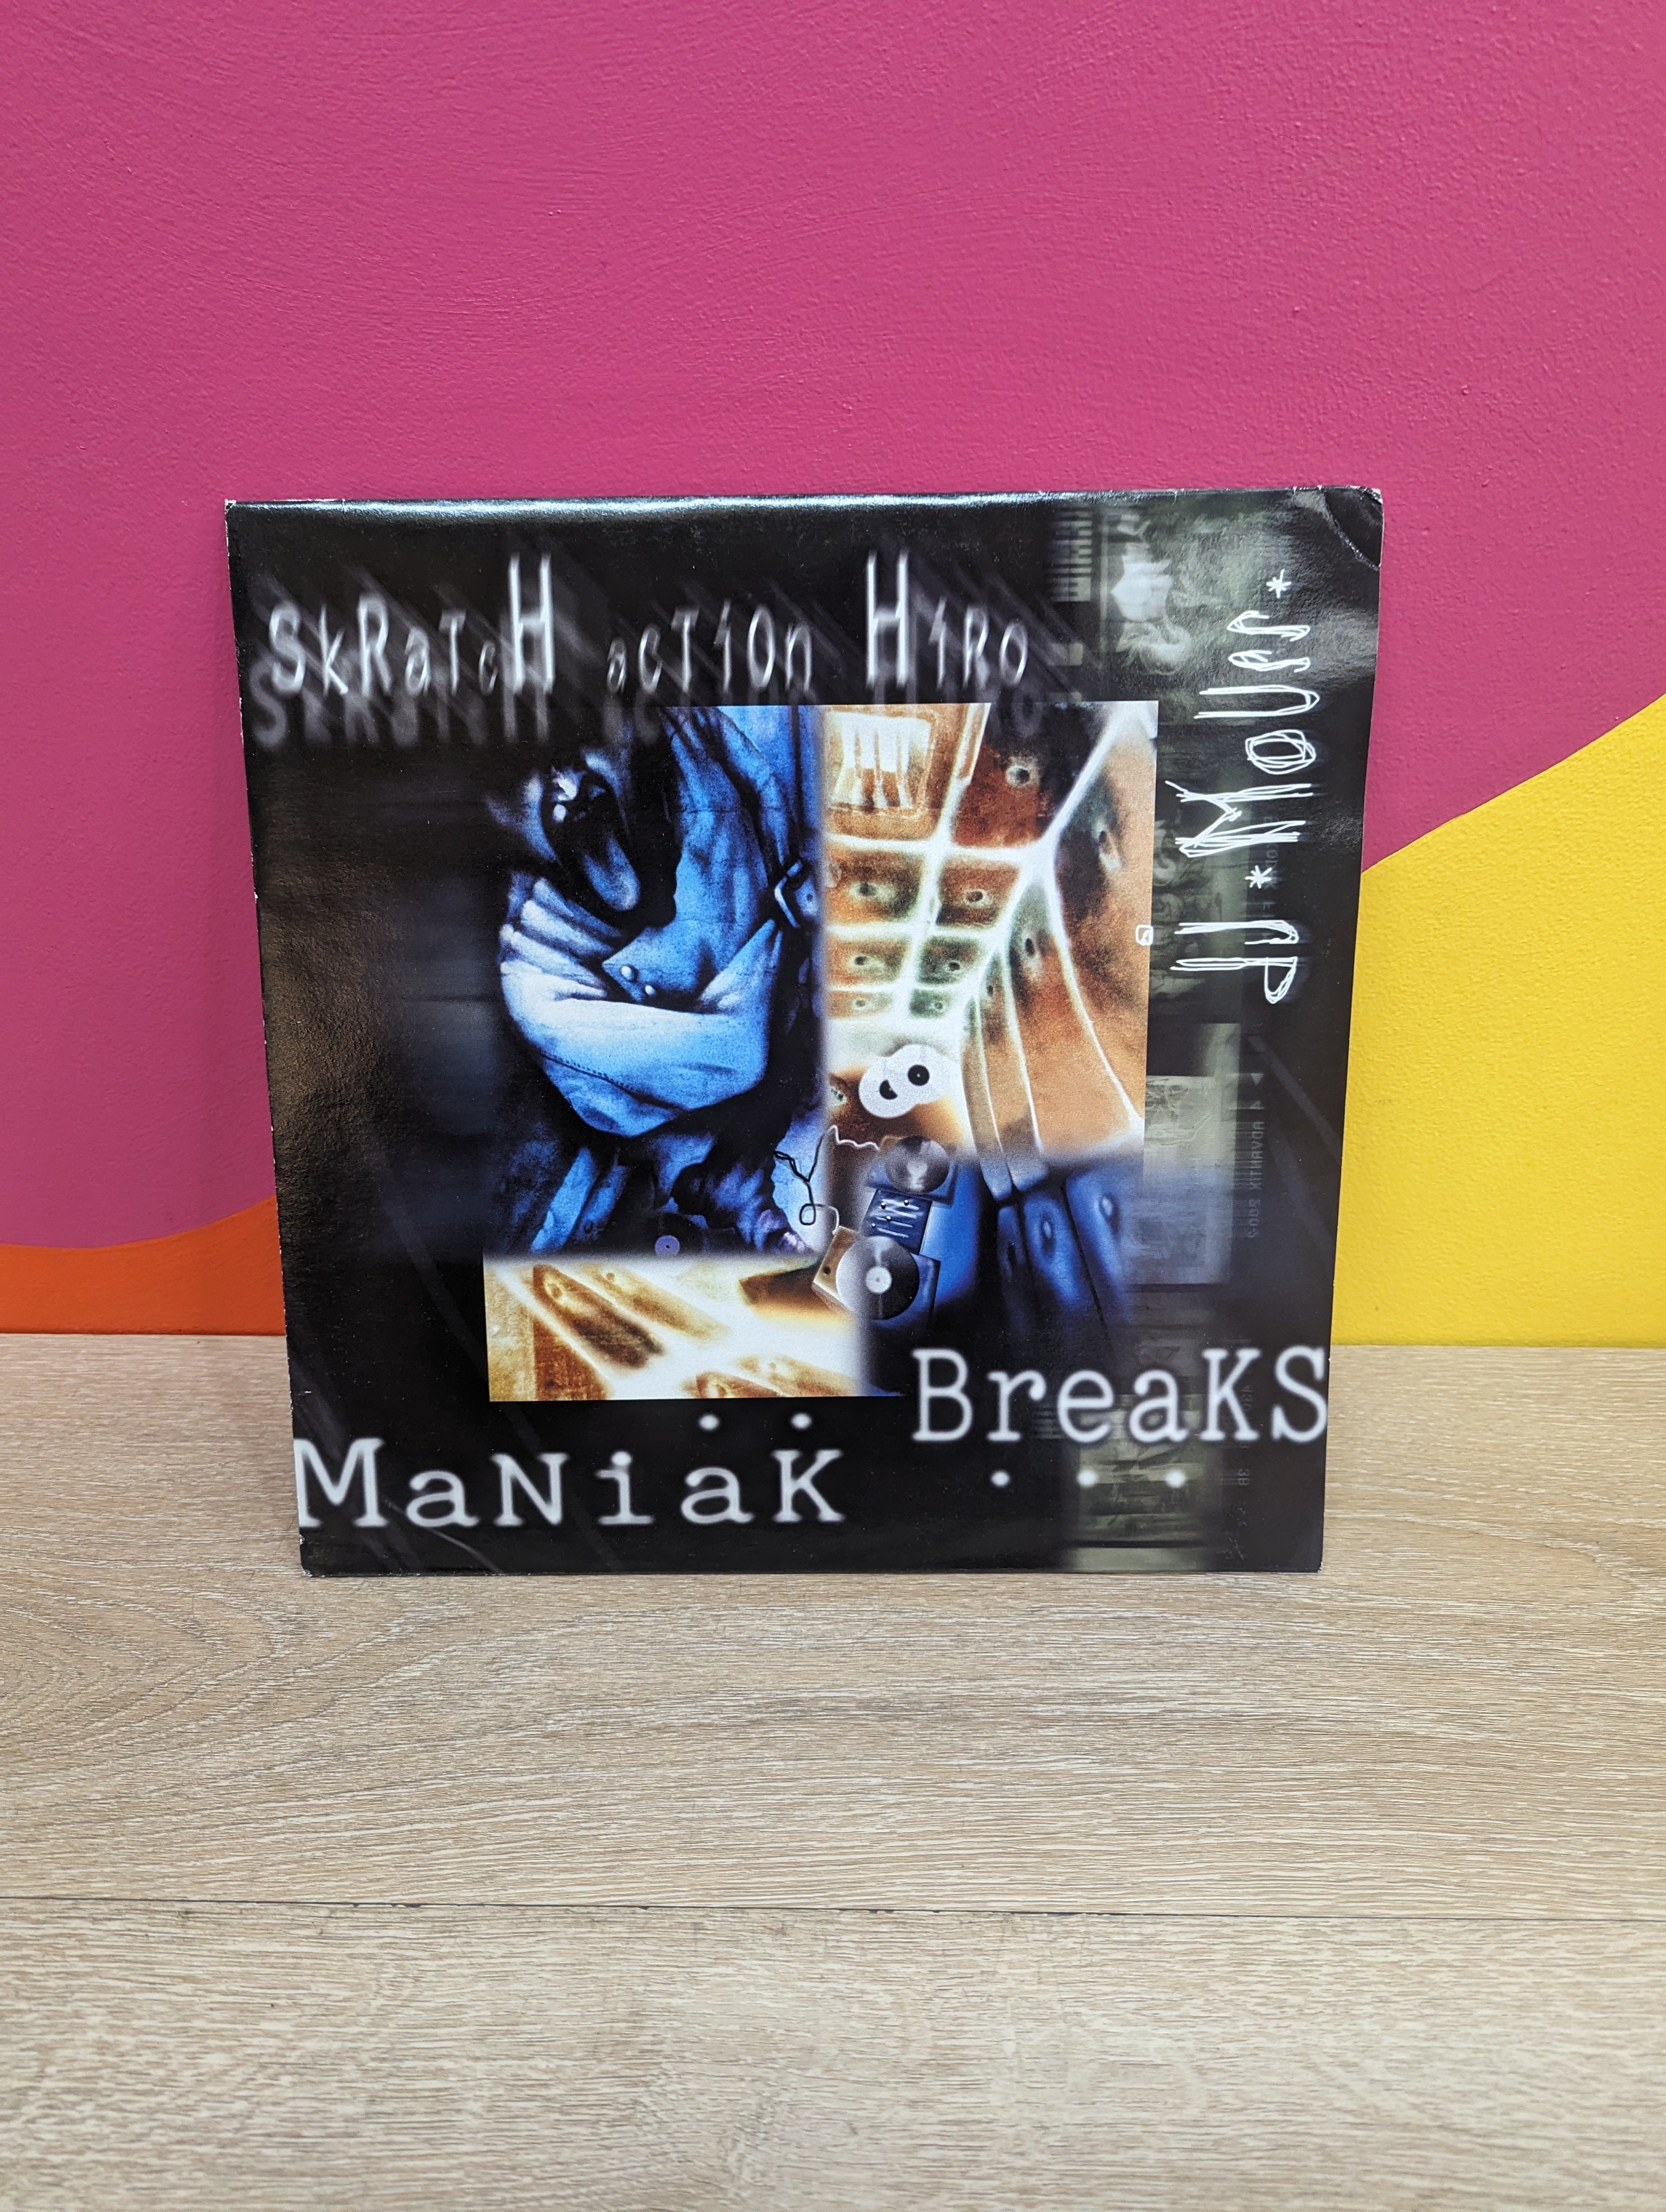 DJ Mouss – Scratch Action Hiro: Maniak Breaks Vinyl